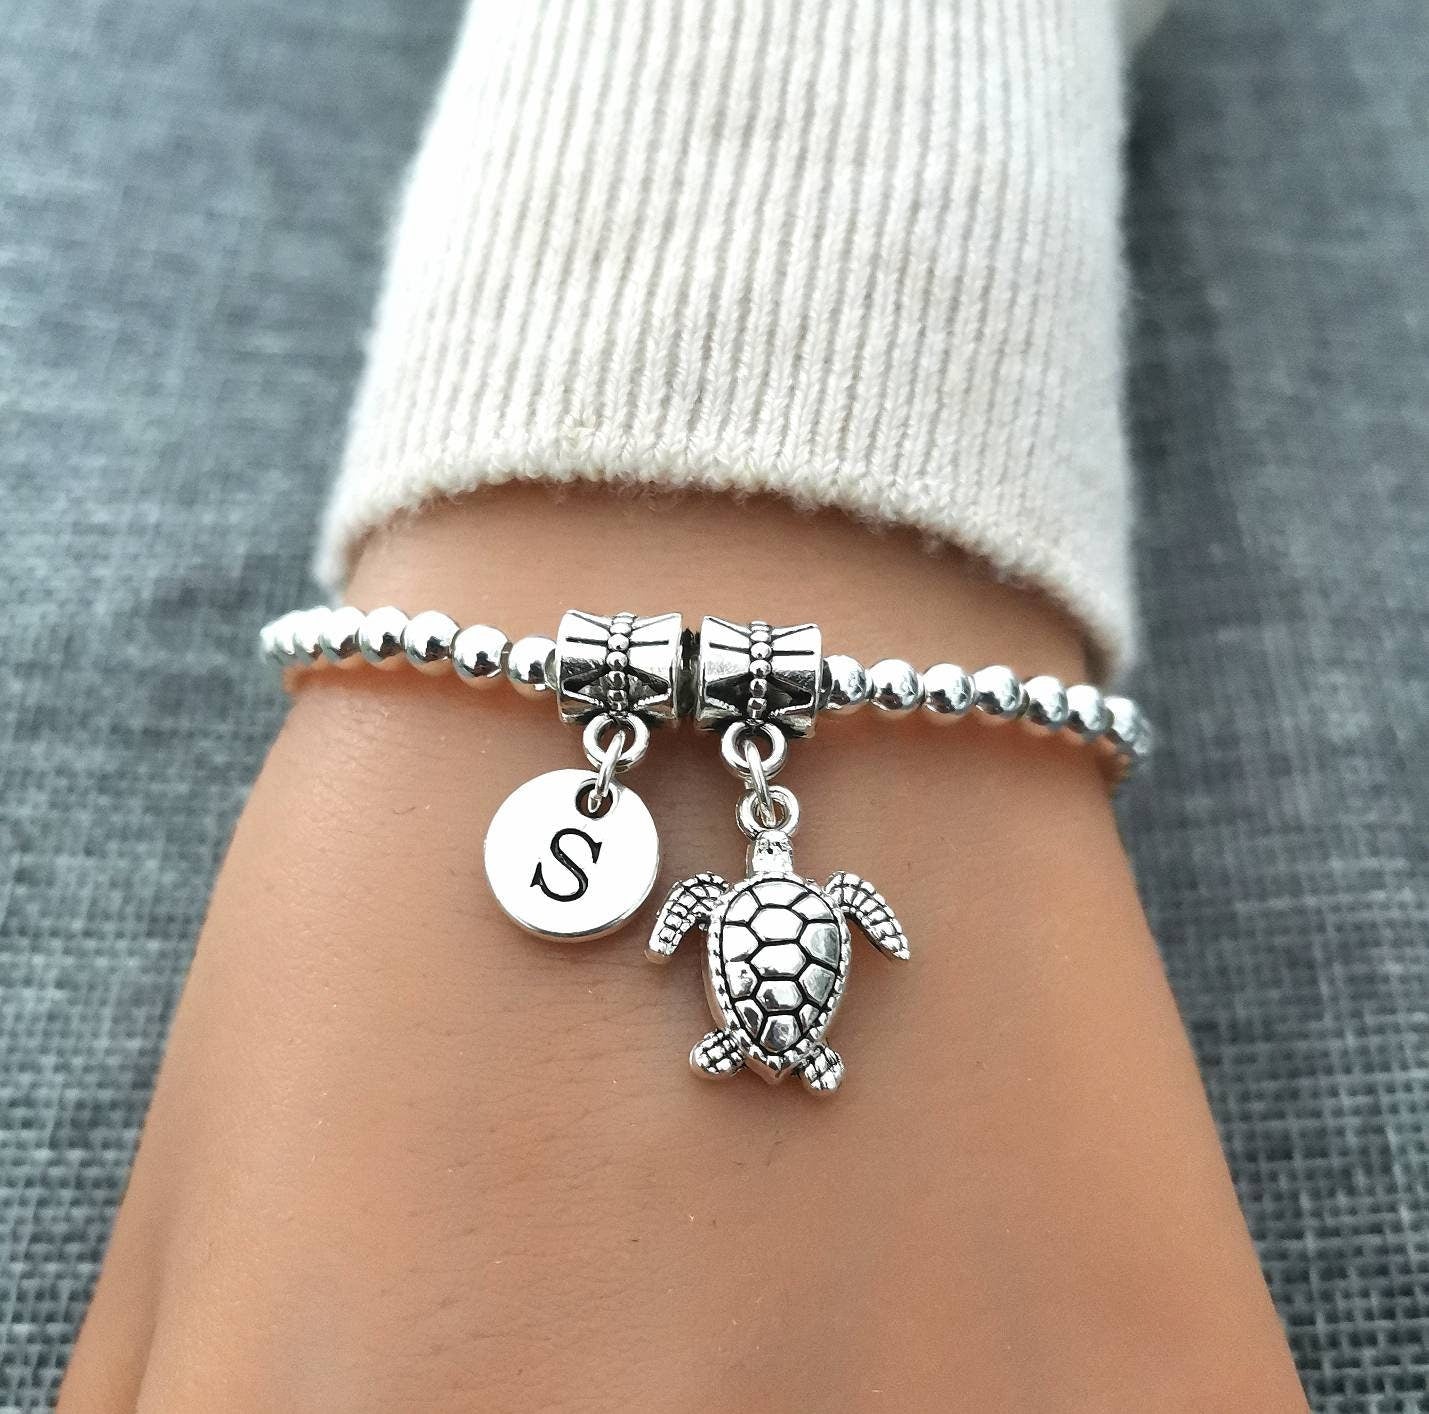 Sea turtle bracelet, Turtle lover gifts, Sea turtle bracelet women, Sea turtle charms, Turtle bracelet for her, Sea turtle jewelry, Turtle